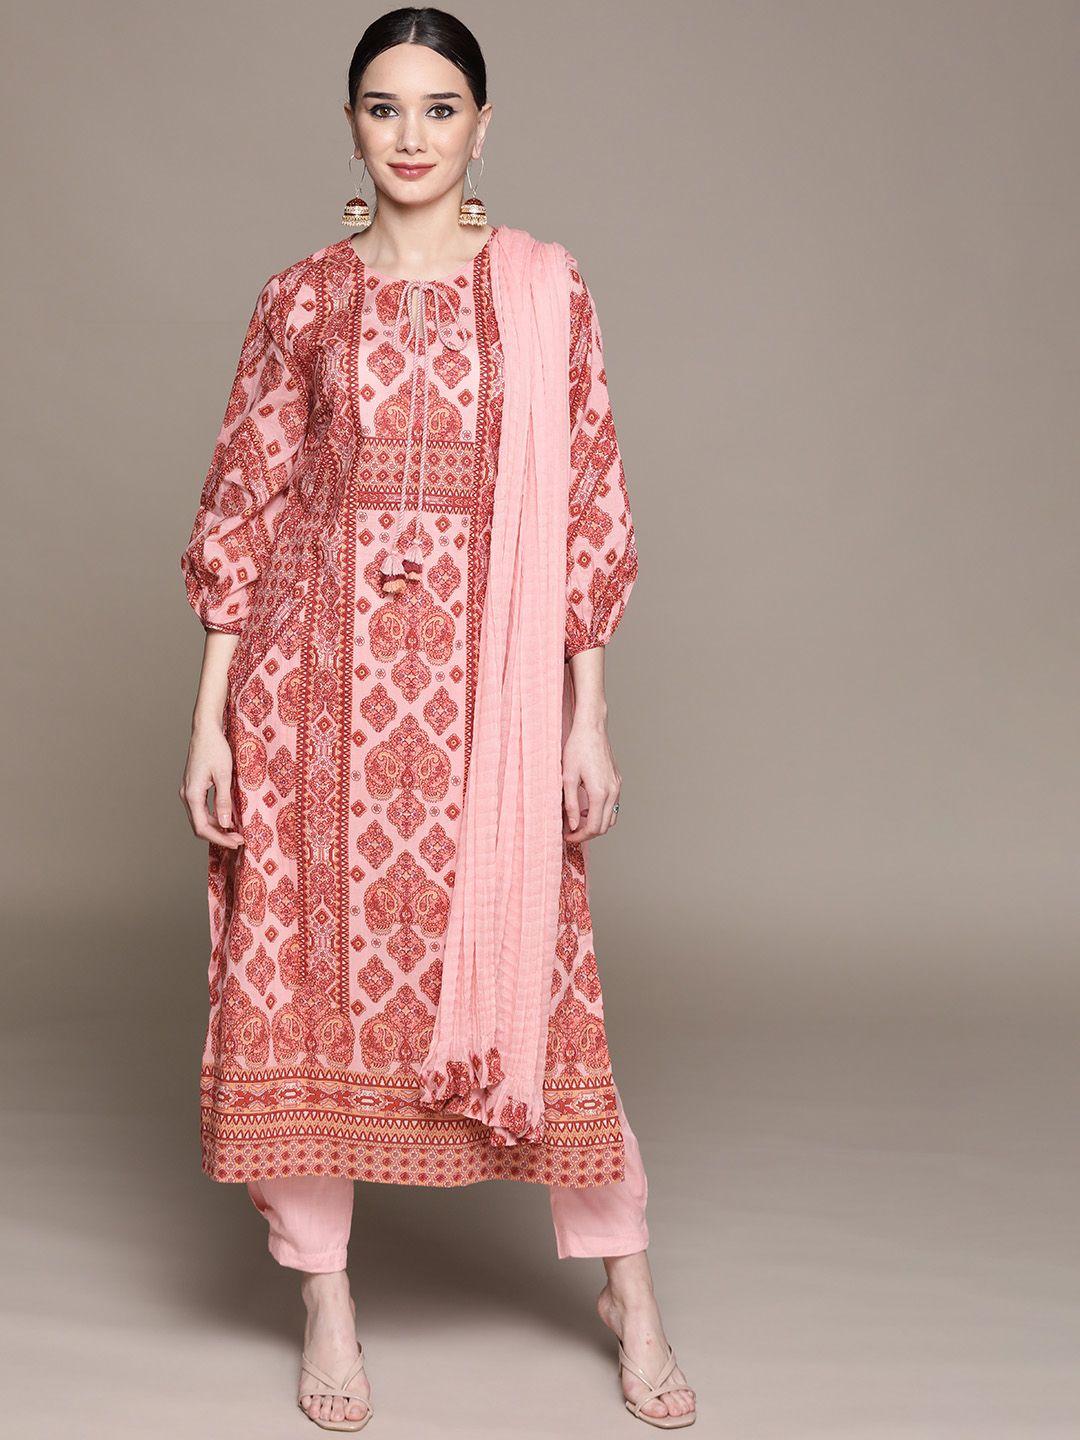 aarke ritu kumar pink & orange ethnic printed straight kurta afgan salwar & dupatta